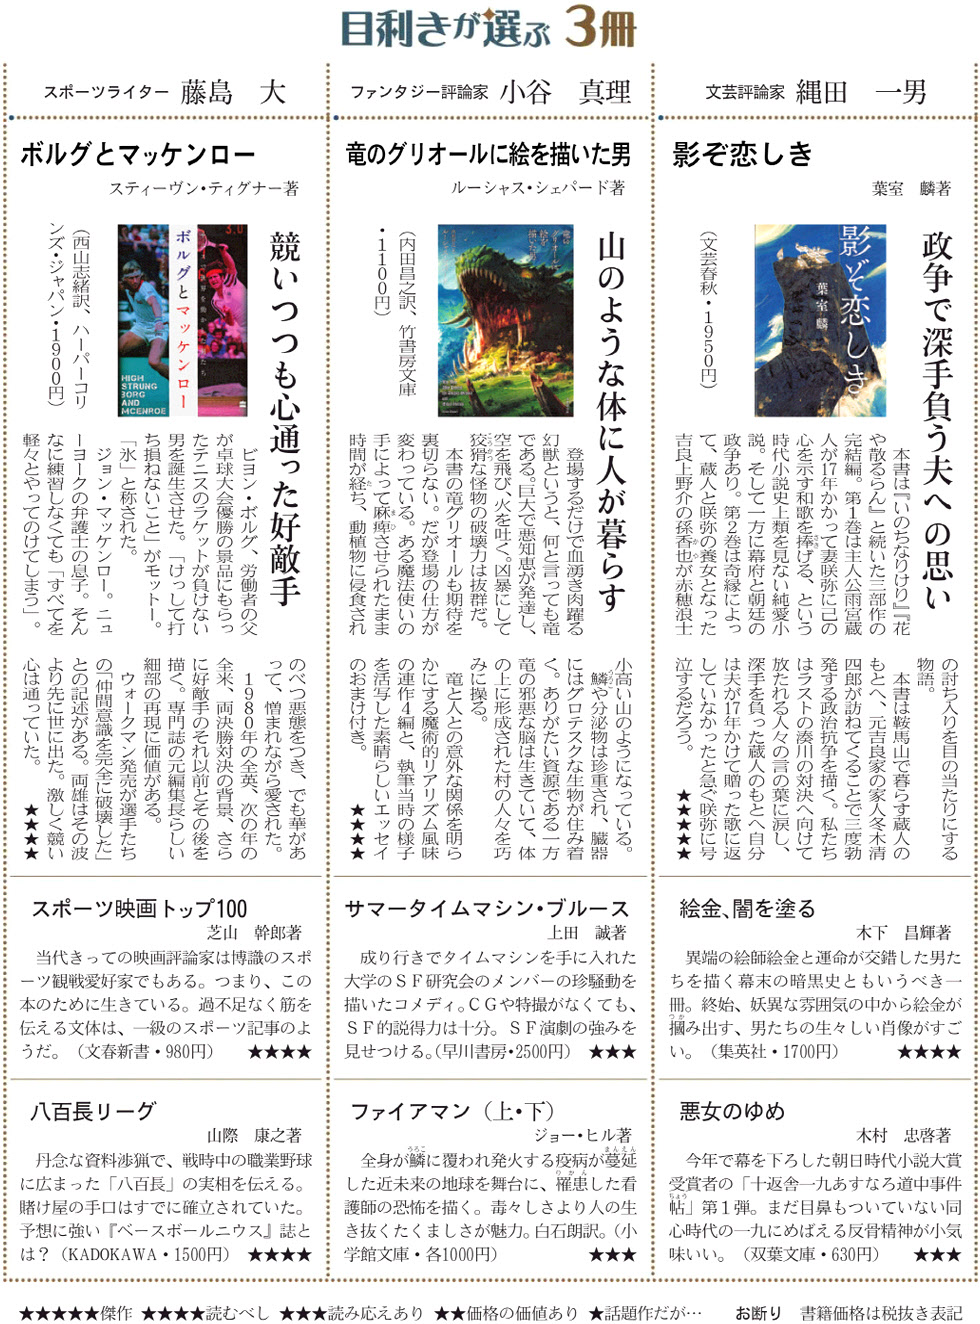 今週の3冊一覧 日本経済新聞